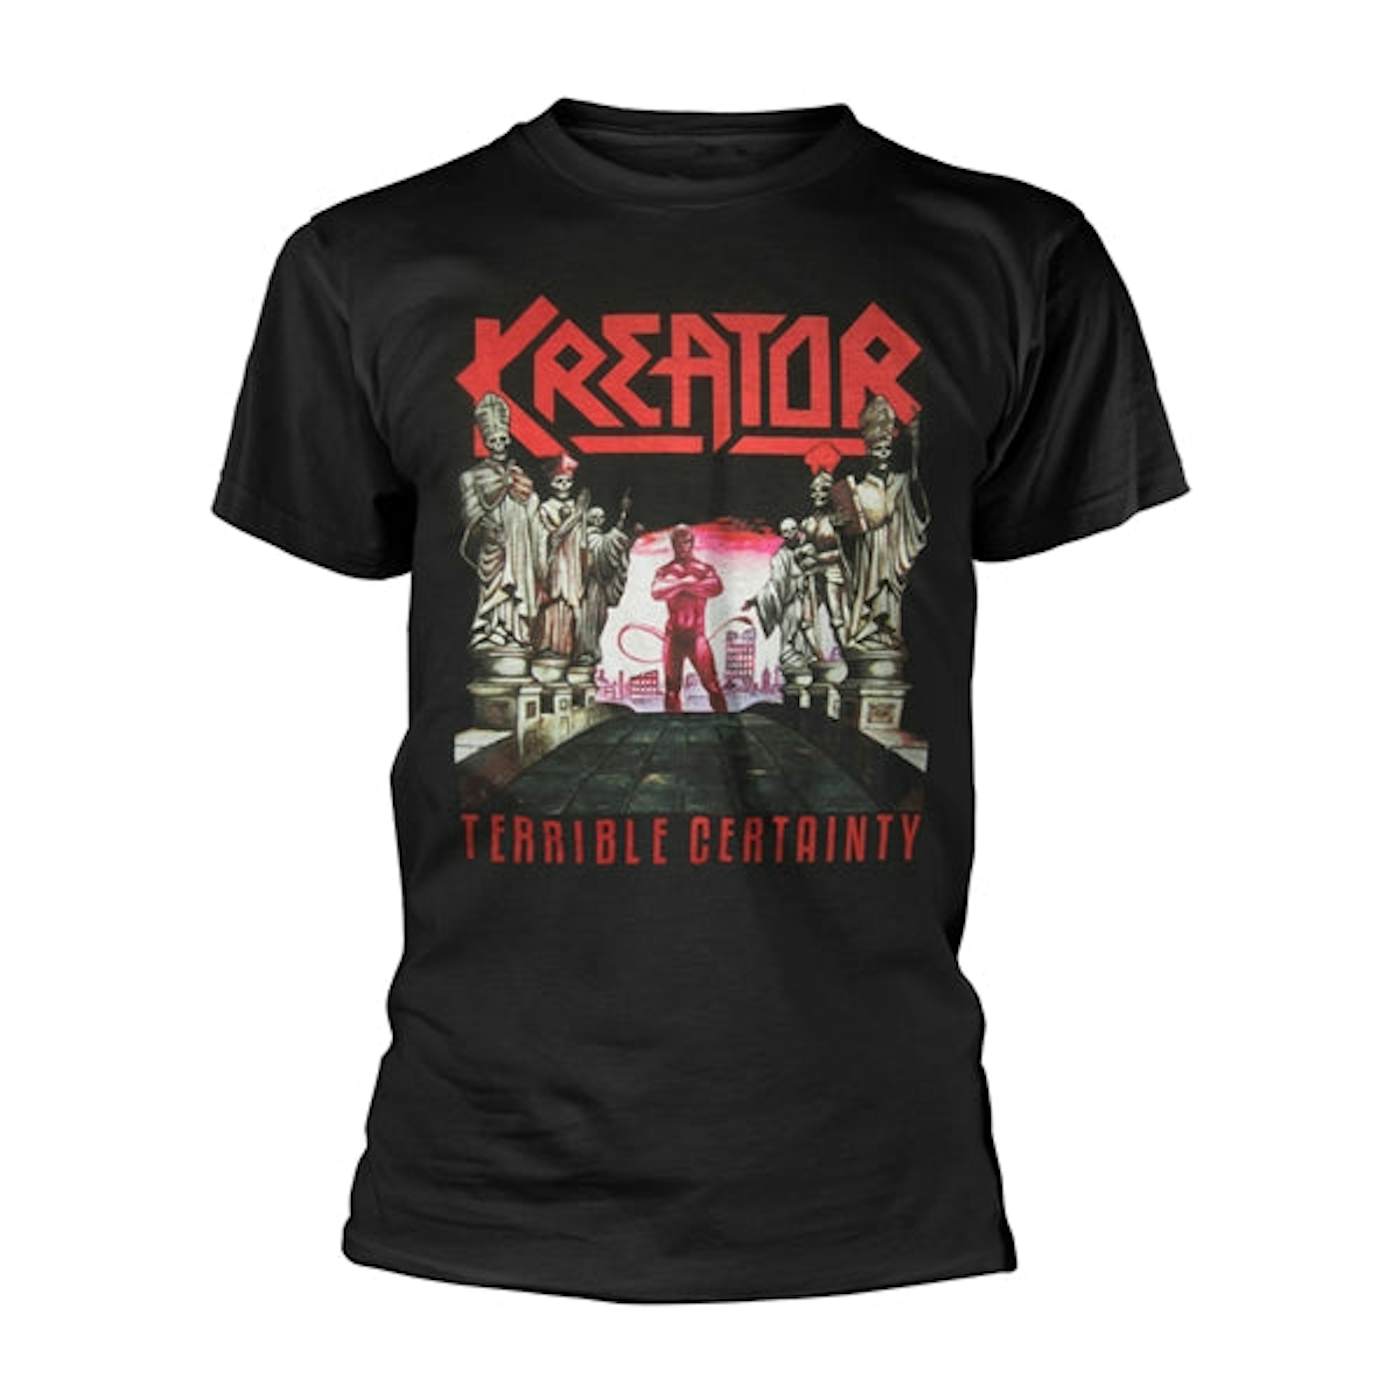 Kreator T Shirt - Terrible Certainty